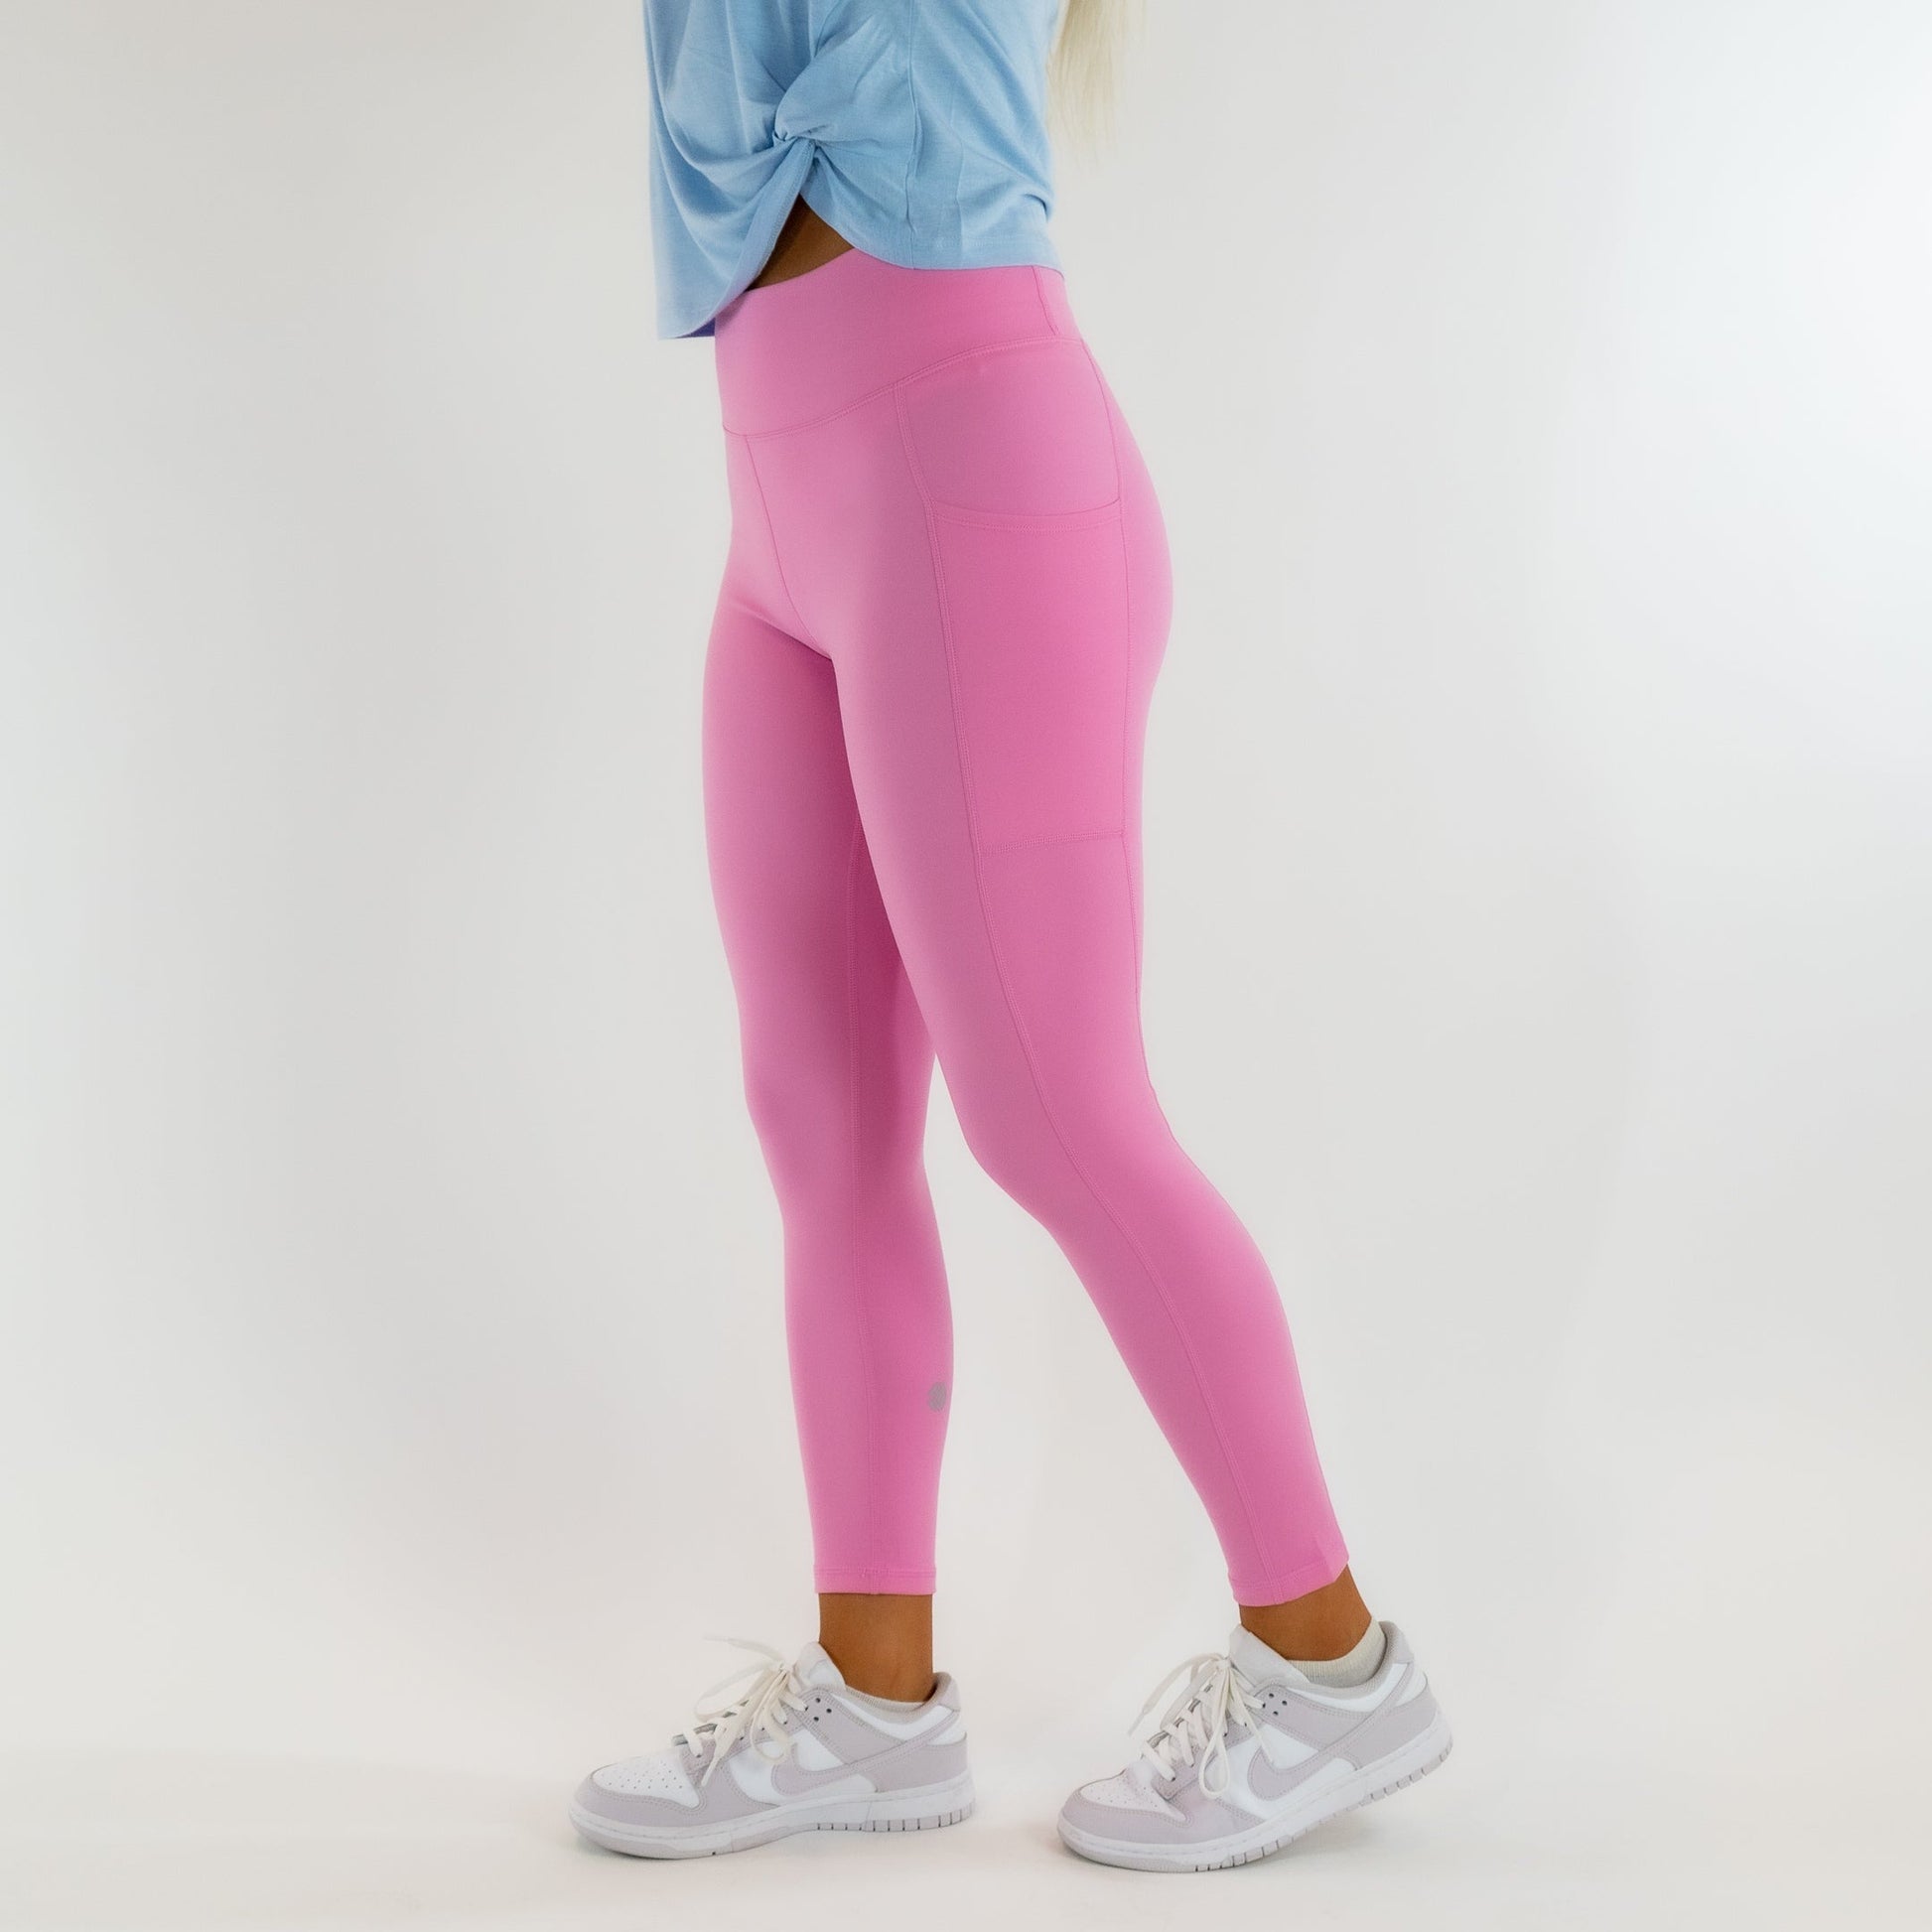 HIIT legging with contour seam in pink